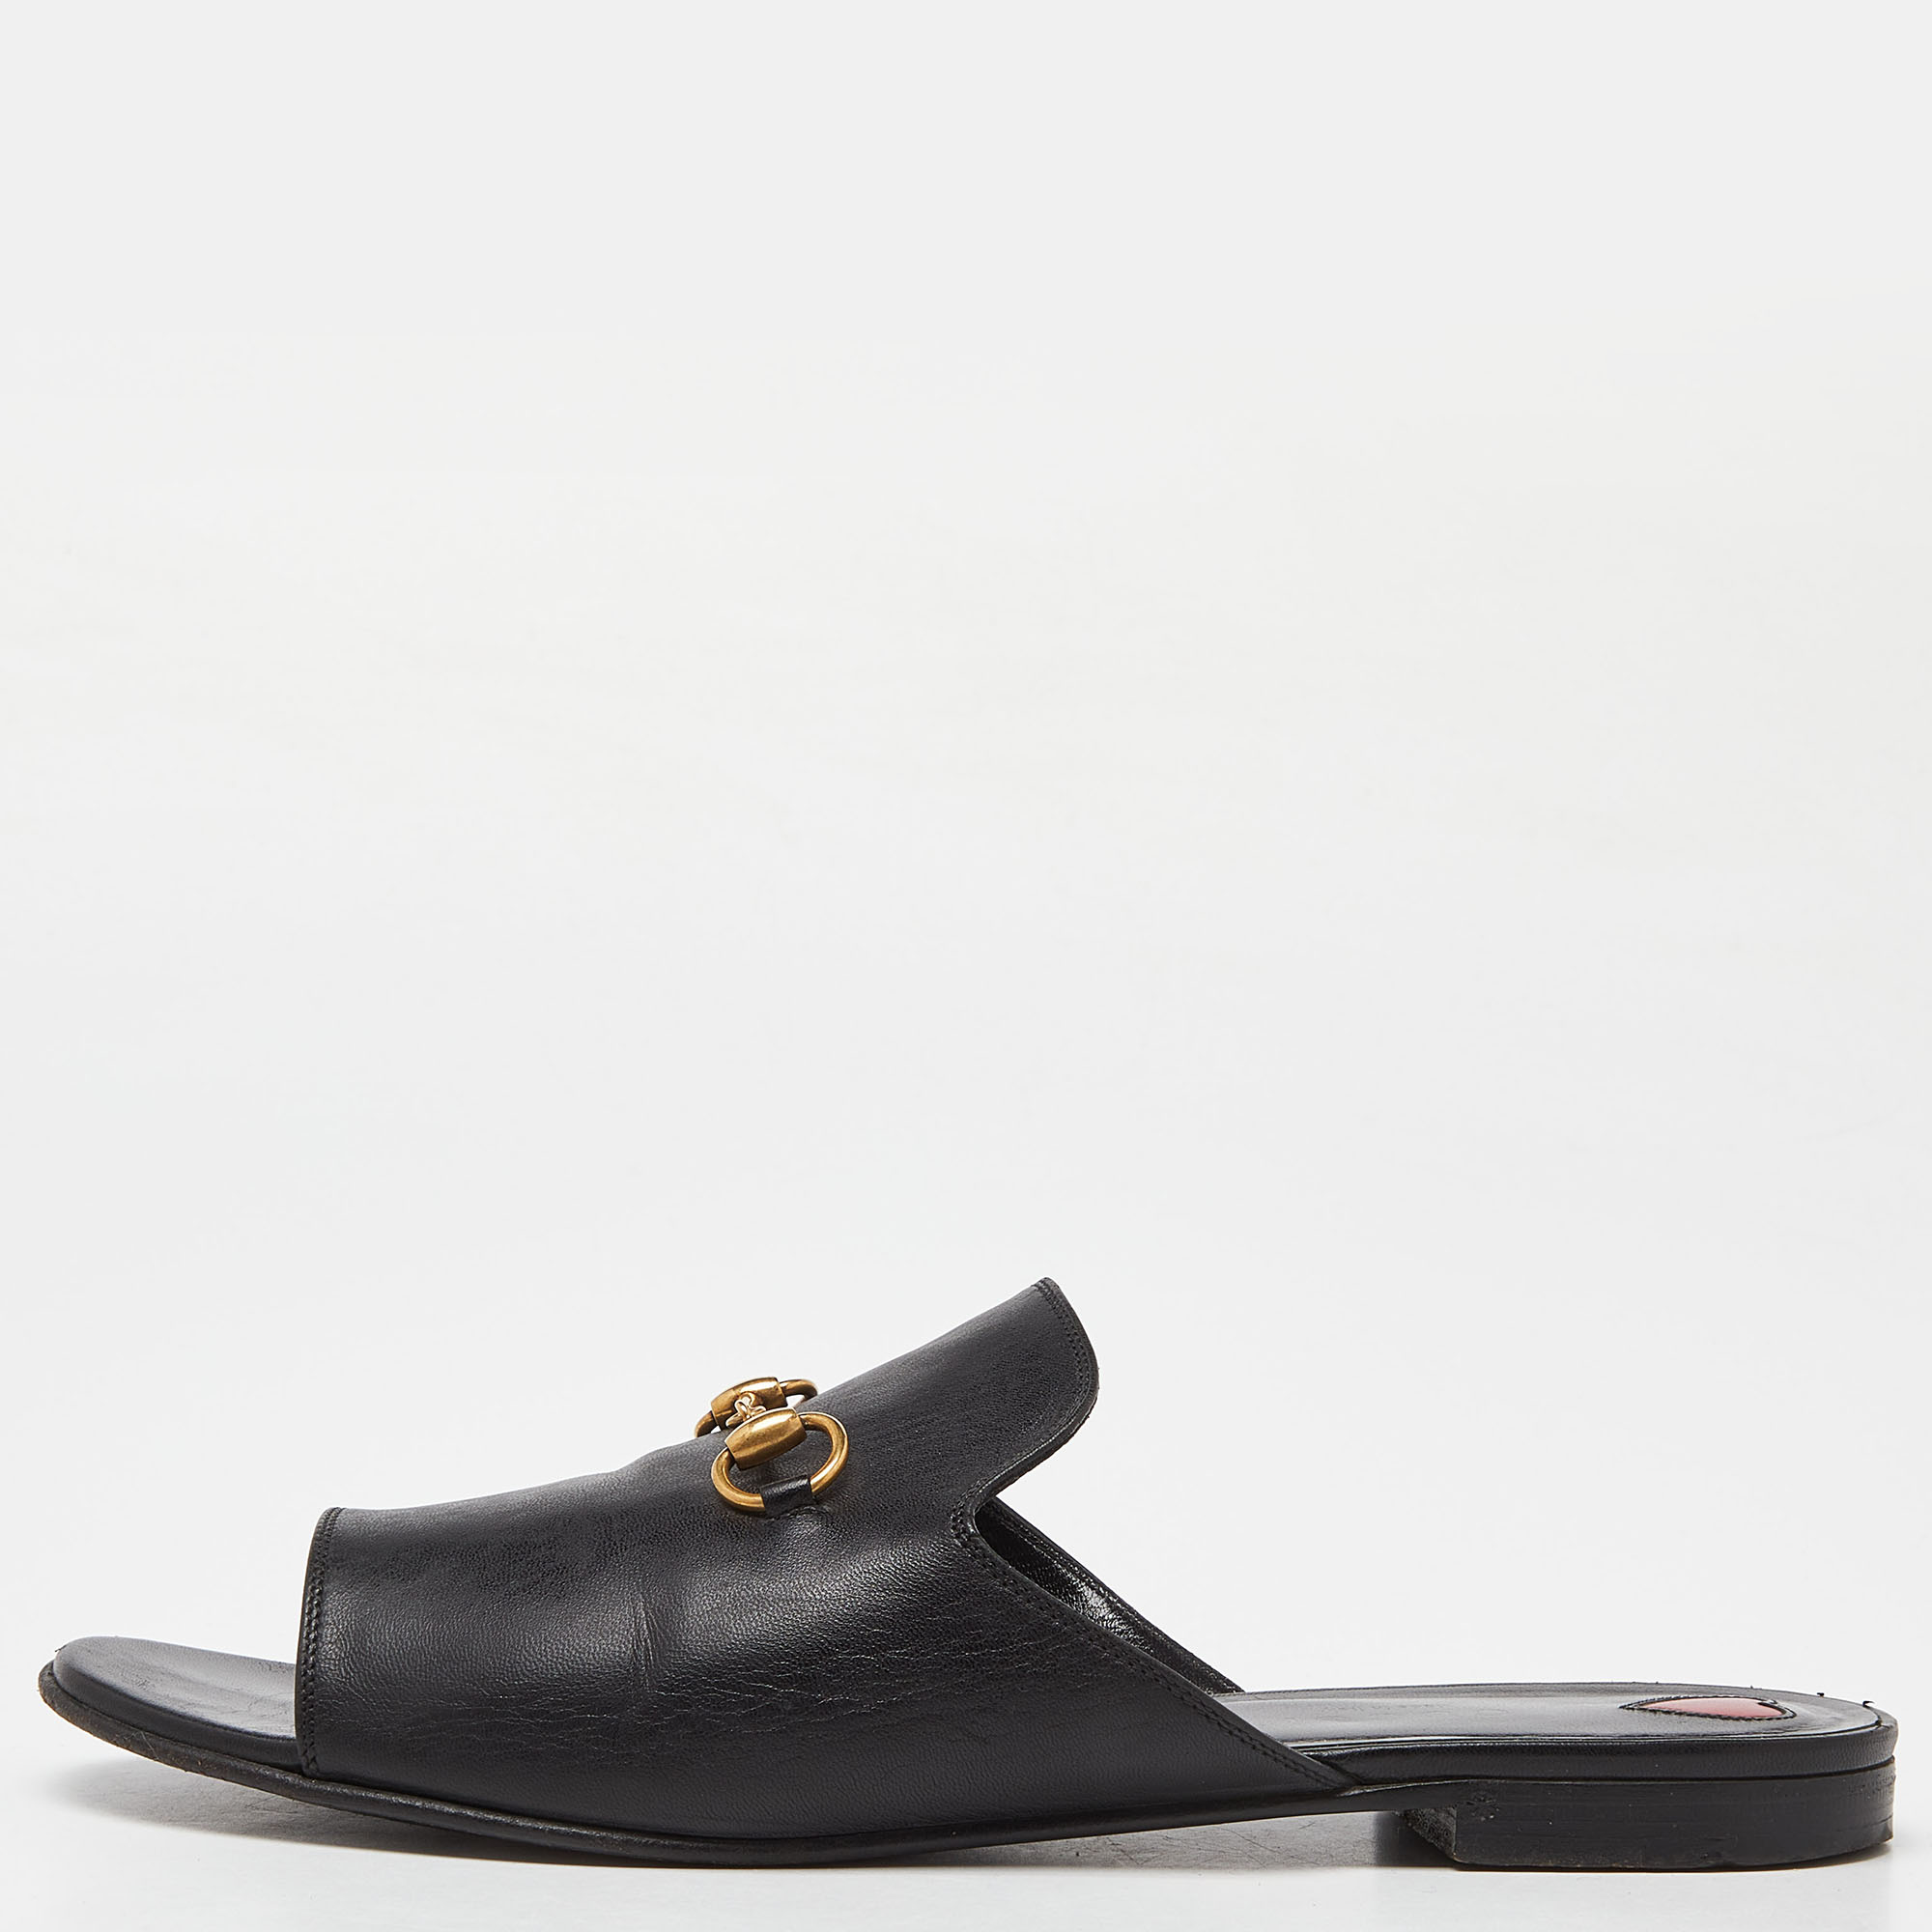 Pre-owned Gucci Black Leather Horsebit Flat Slides Size 39.5